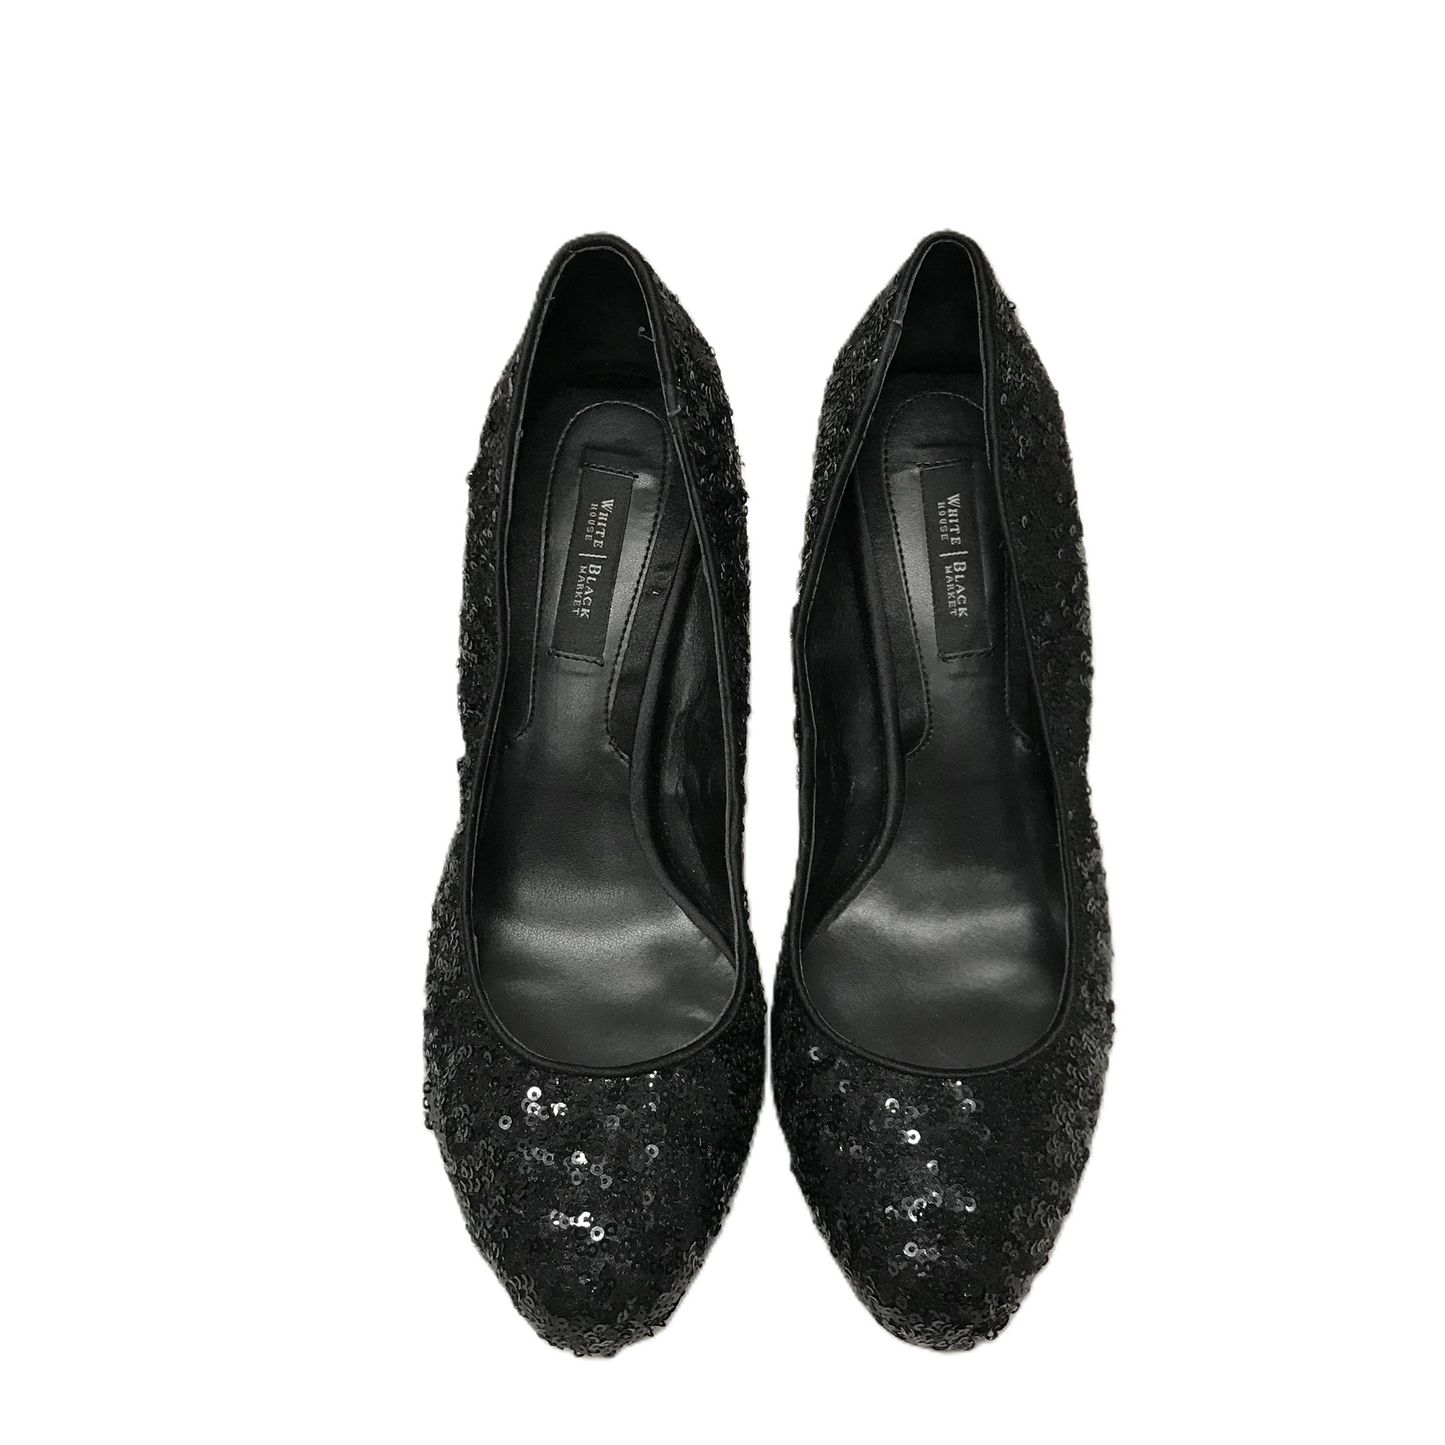 Black Shoes Heels Block By White House Black Market, Size: 8.5